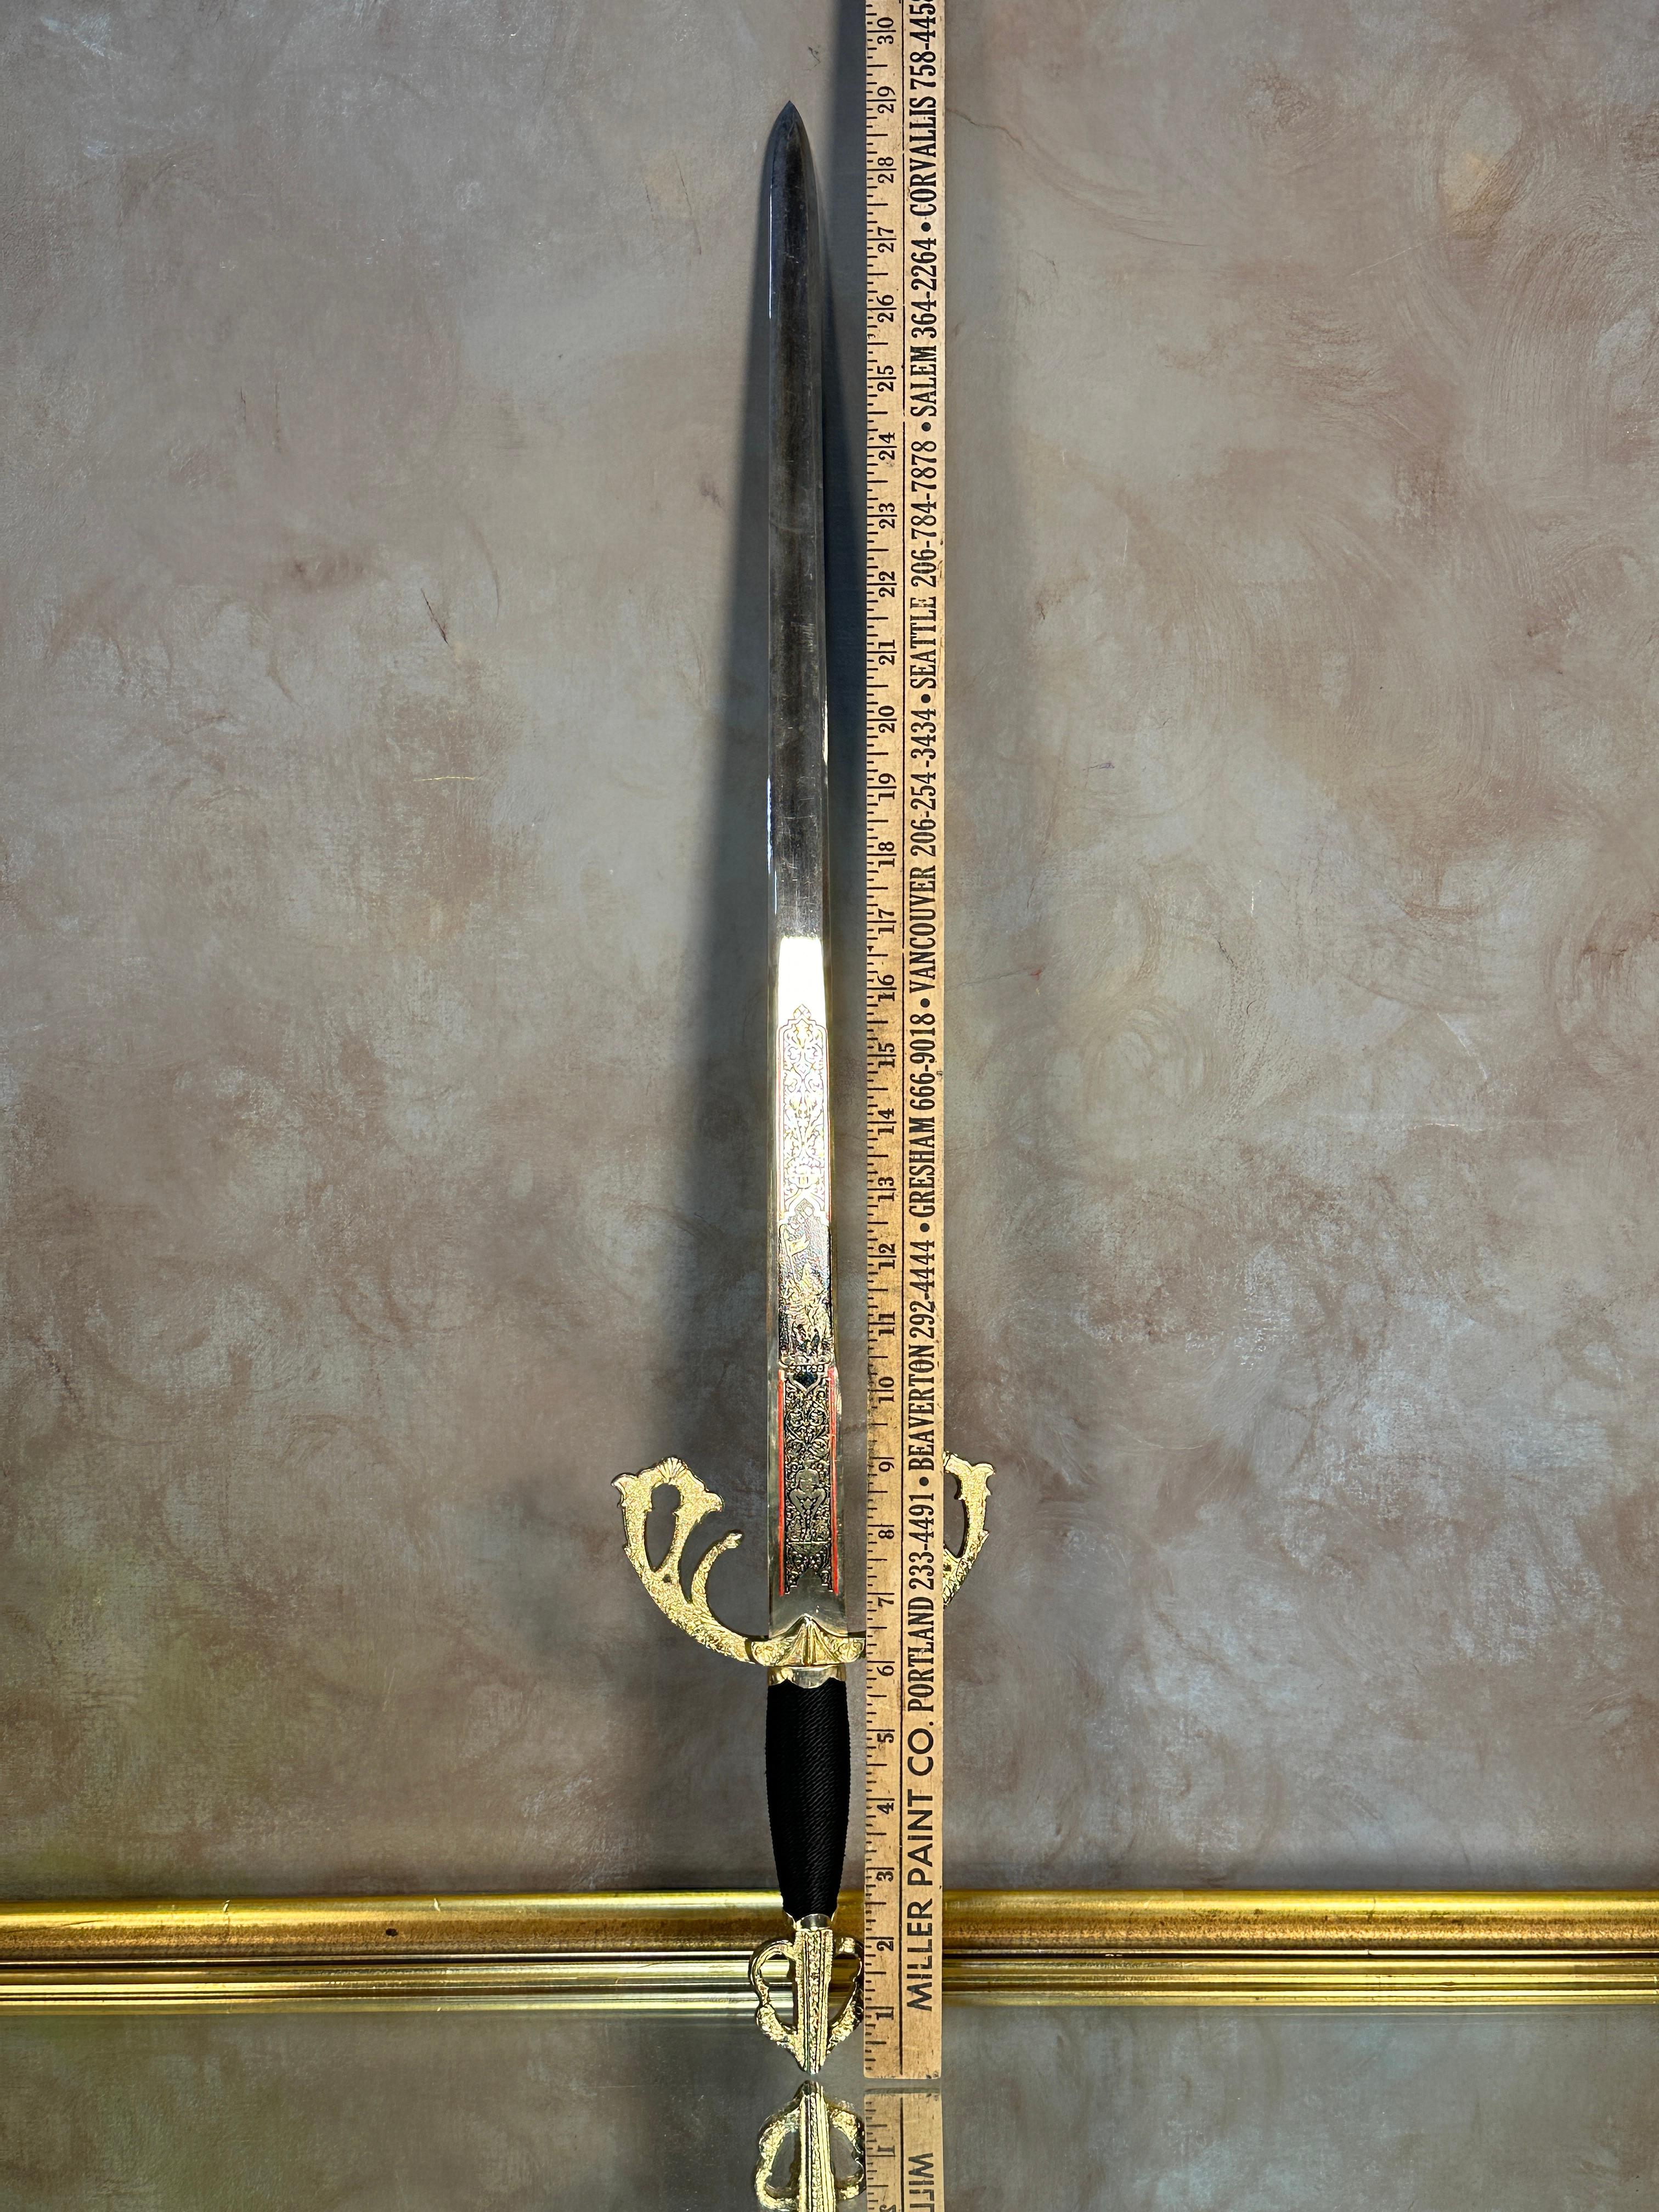 Tizona del Cid Spanish Sword